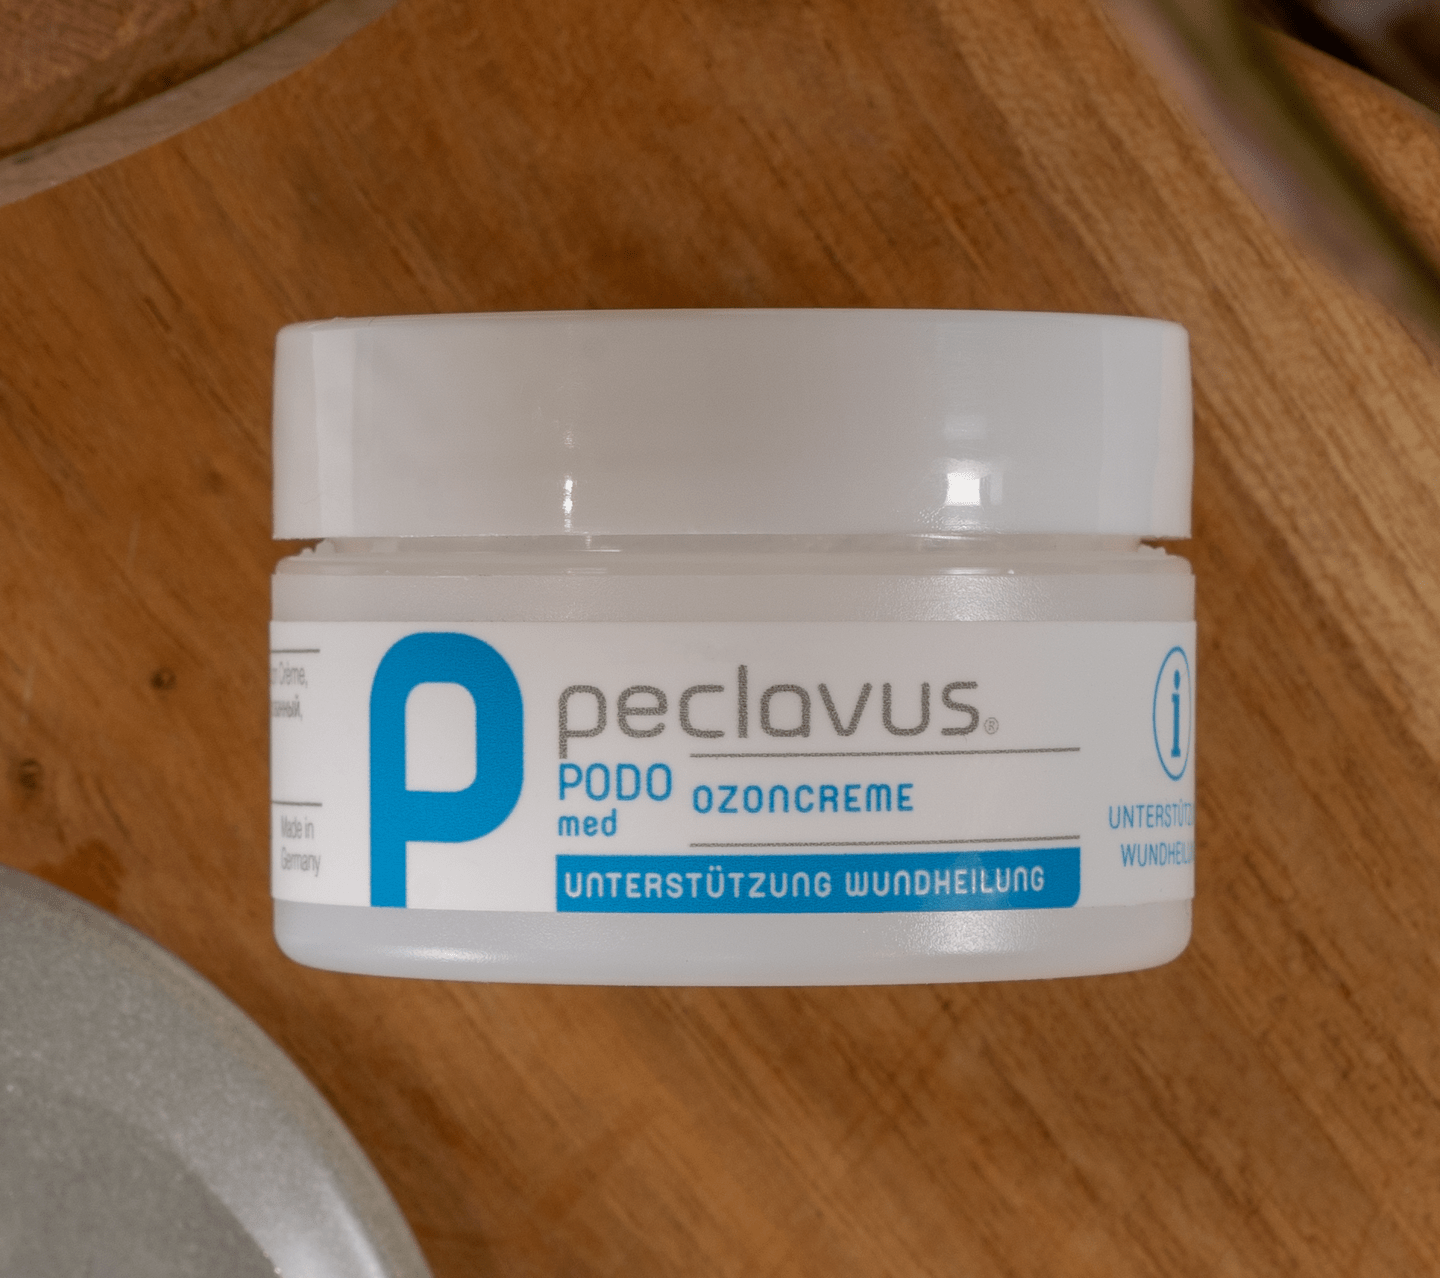 peclavus - Ozoncreme, 15 ml